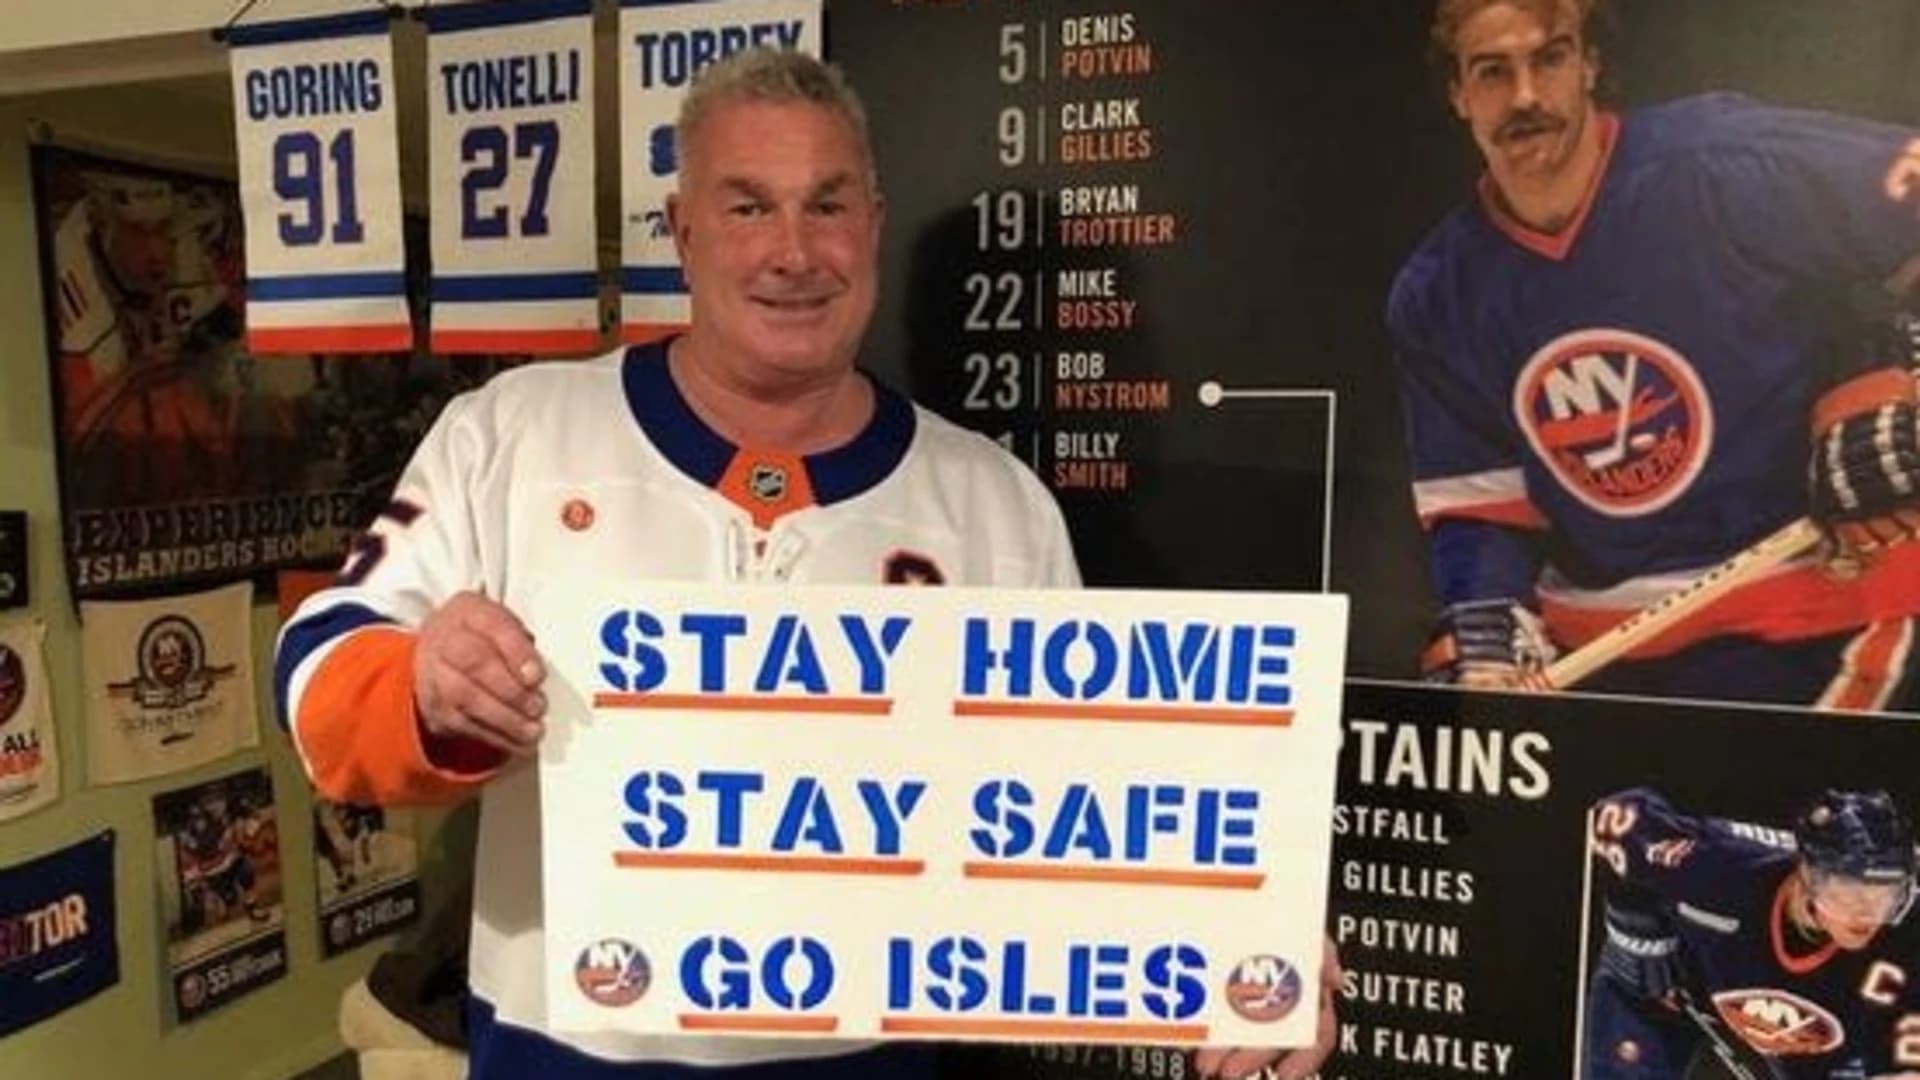 Islanders ‘sign guy’ keeping his skills sharp during pandemic